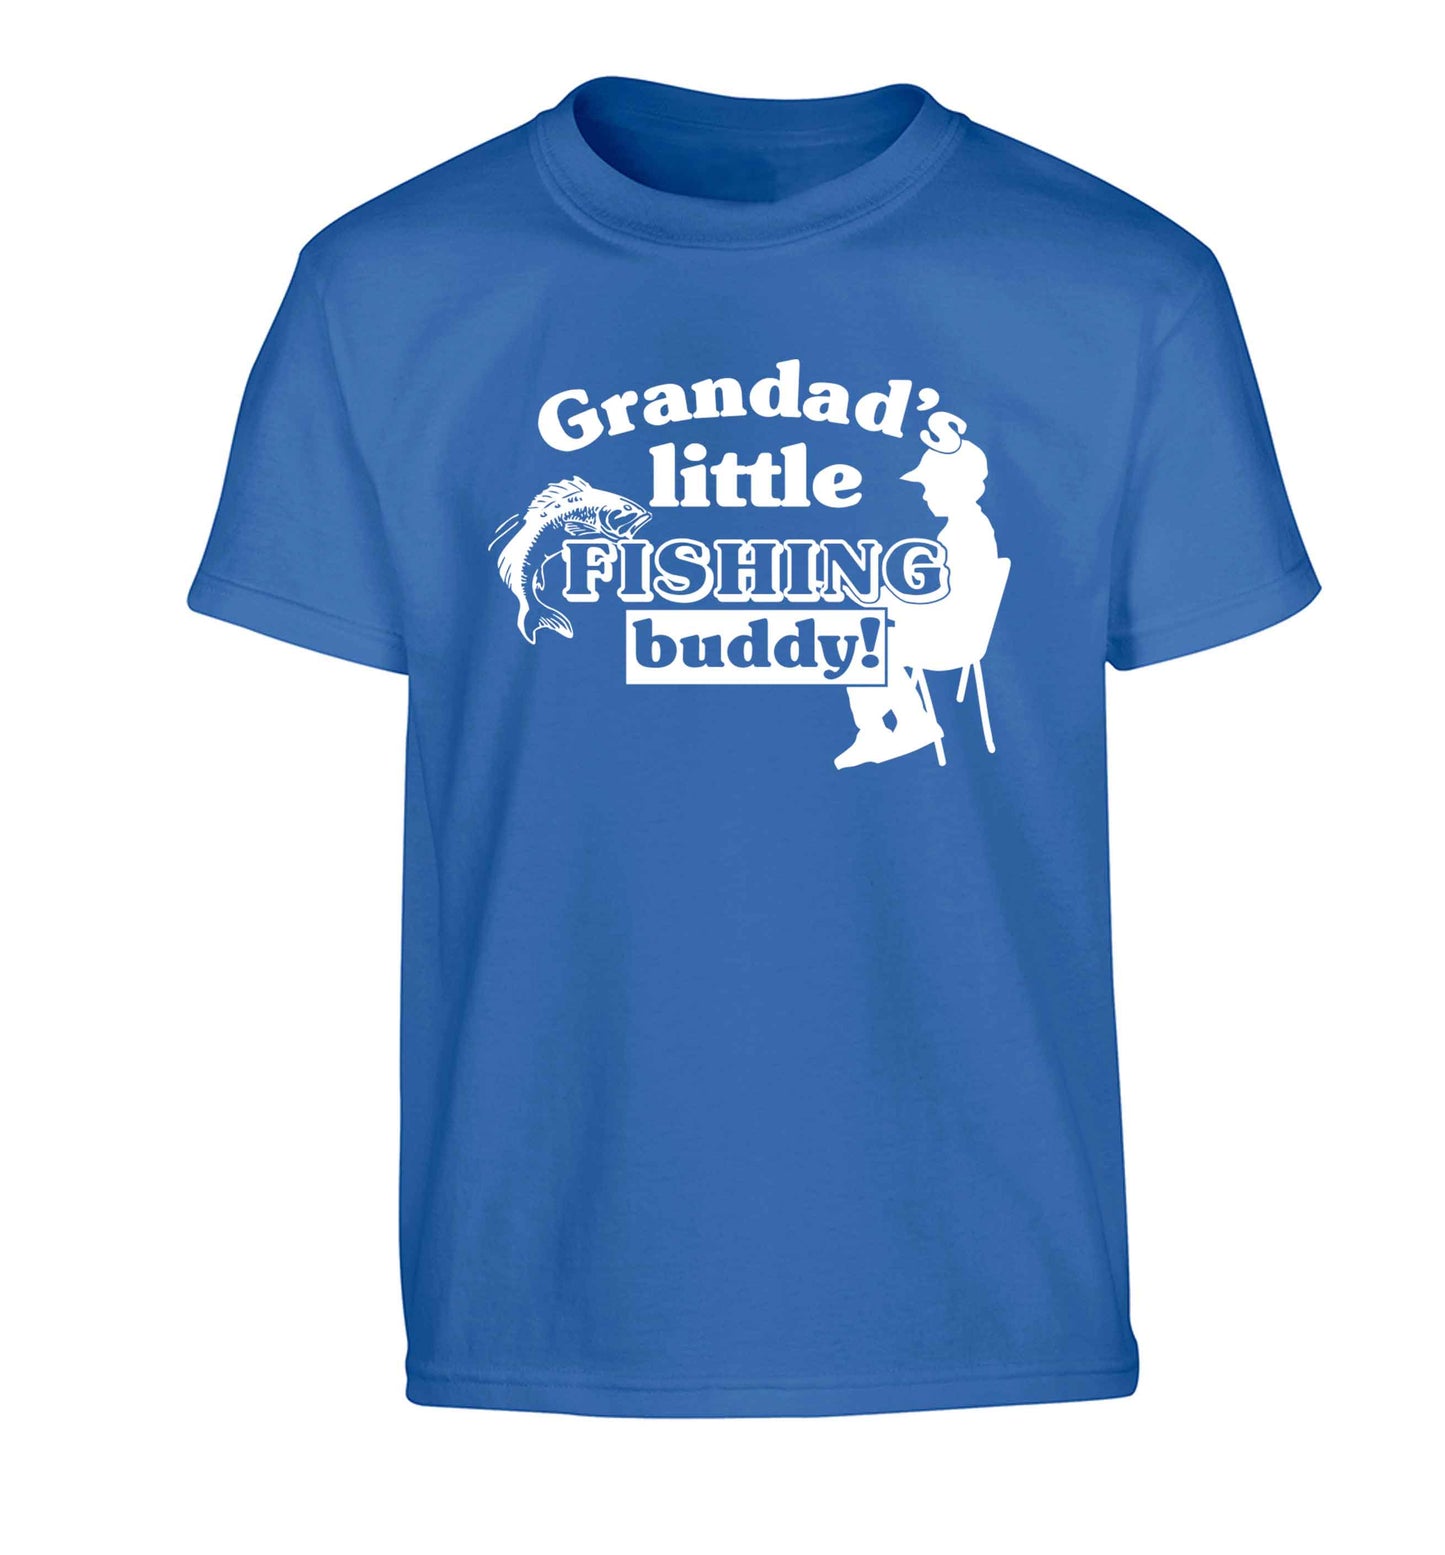 Grandad's little fishing buddy! Children's blue Tshirt 12-13 Years